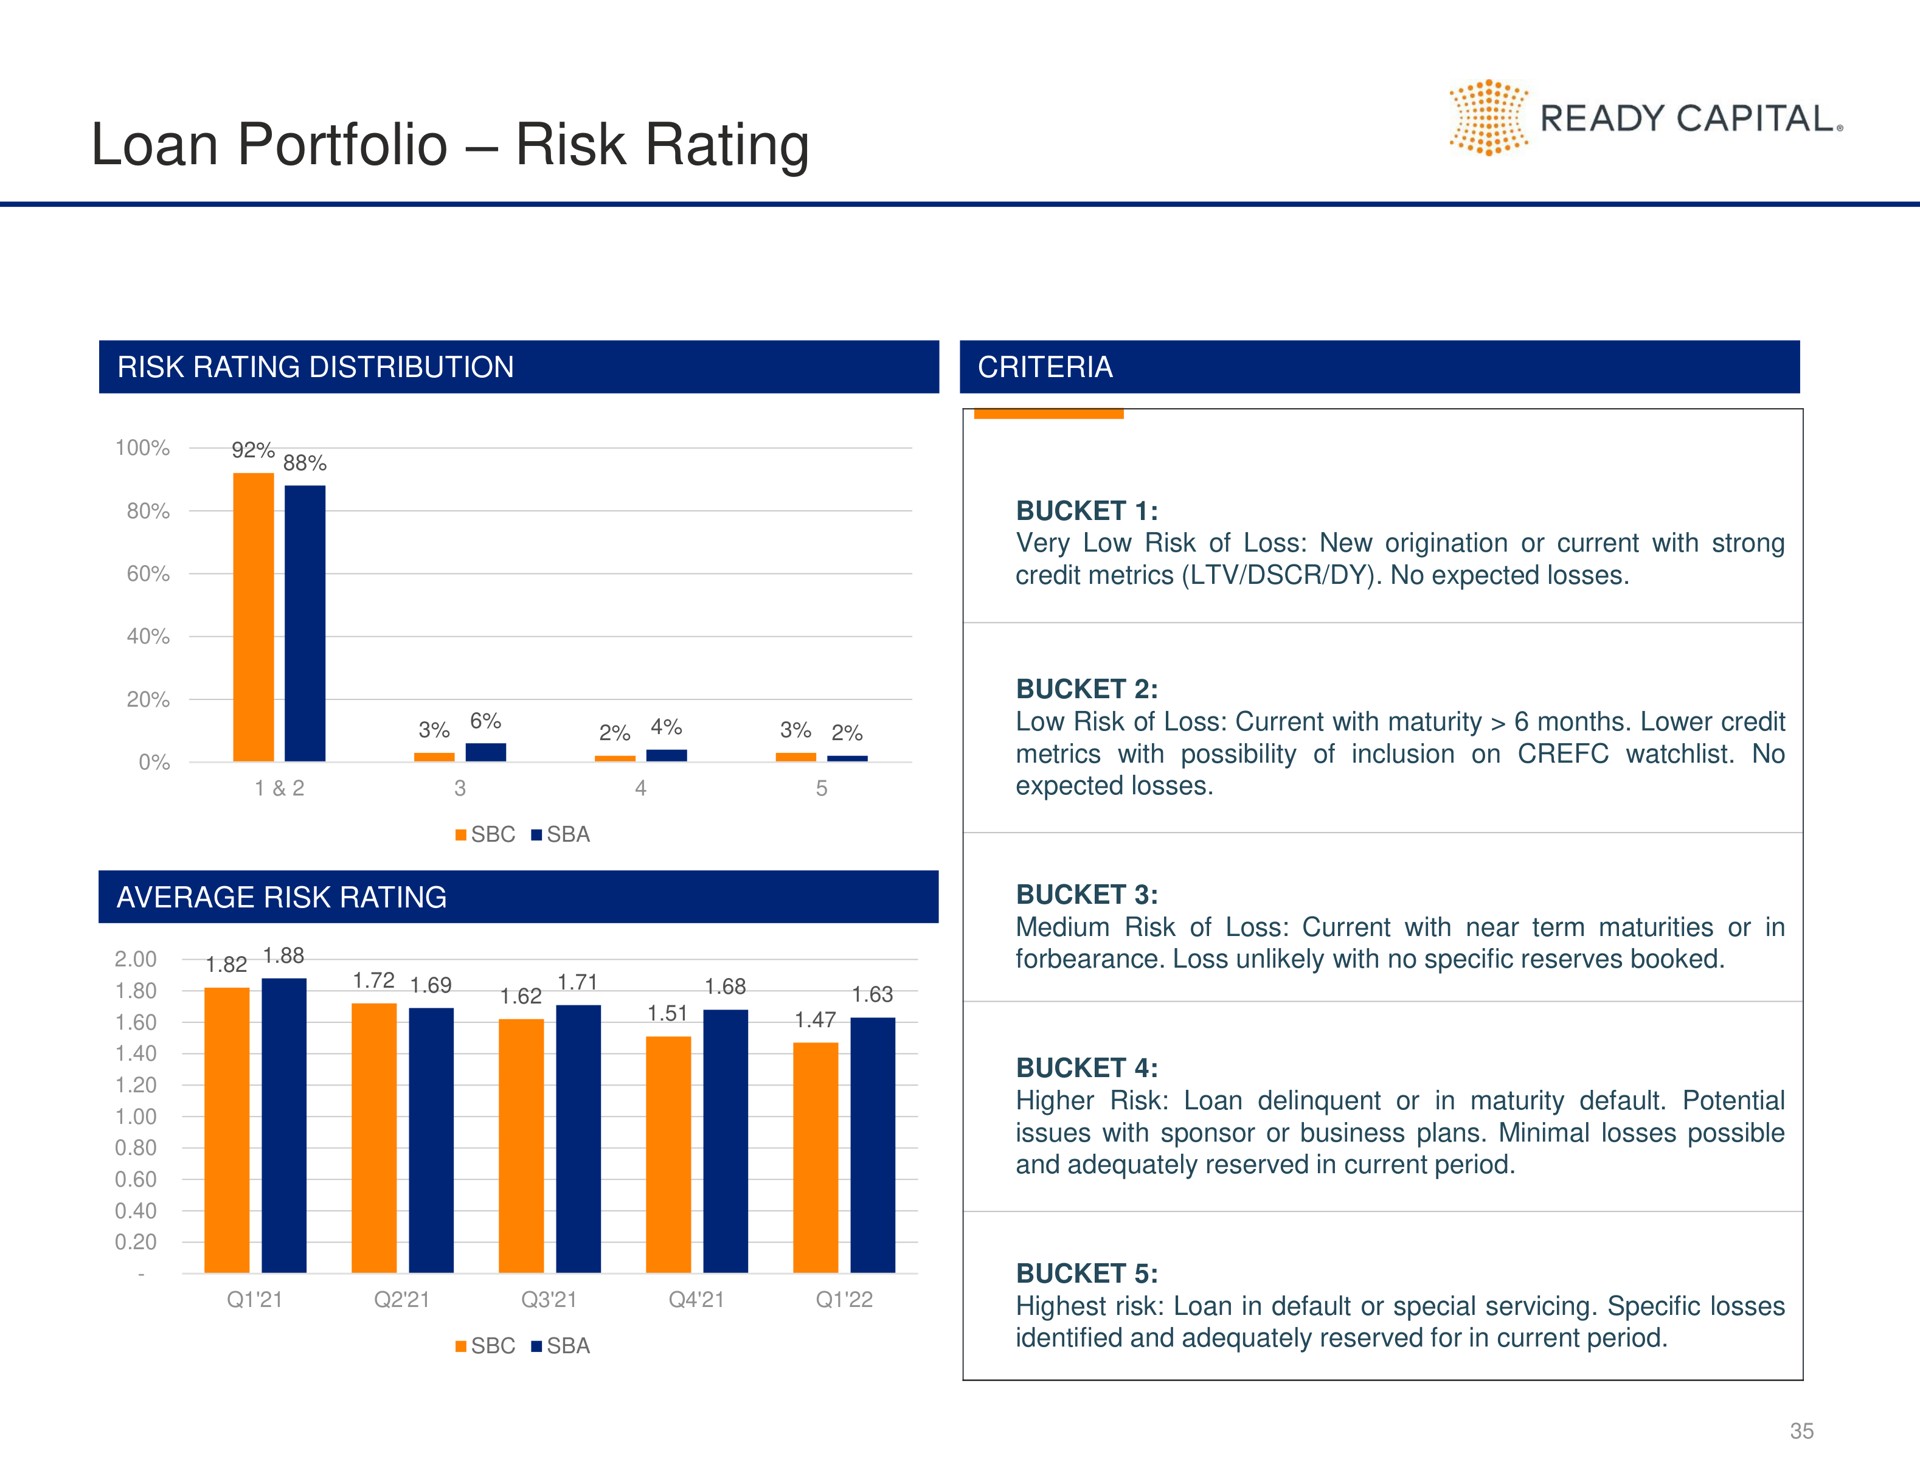 loan portfolio risk rating ready capital bucket a | Ready Capital